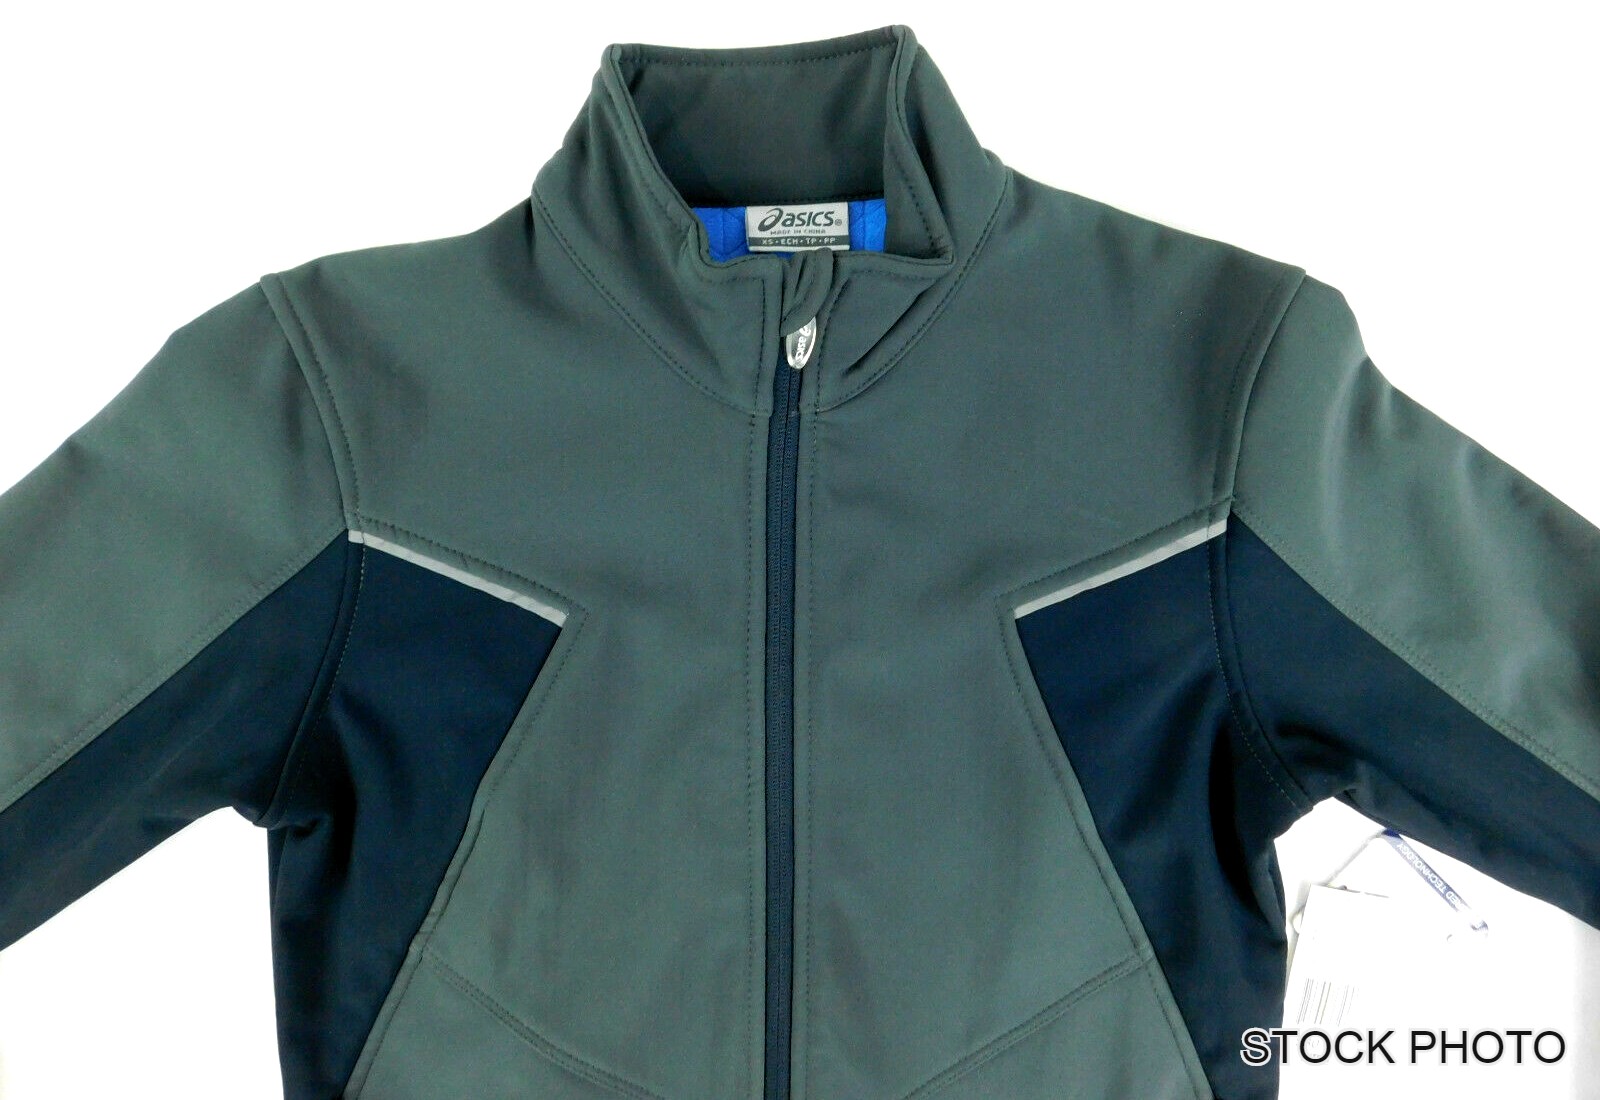 Asics Women's Ultra Waterproof Soft Shell Running Jacket, Dark Gray, Medium - image 2 of 6